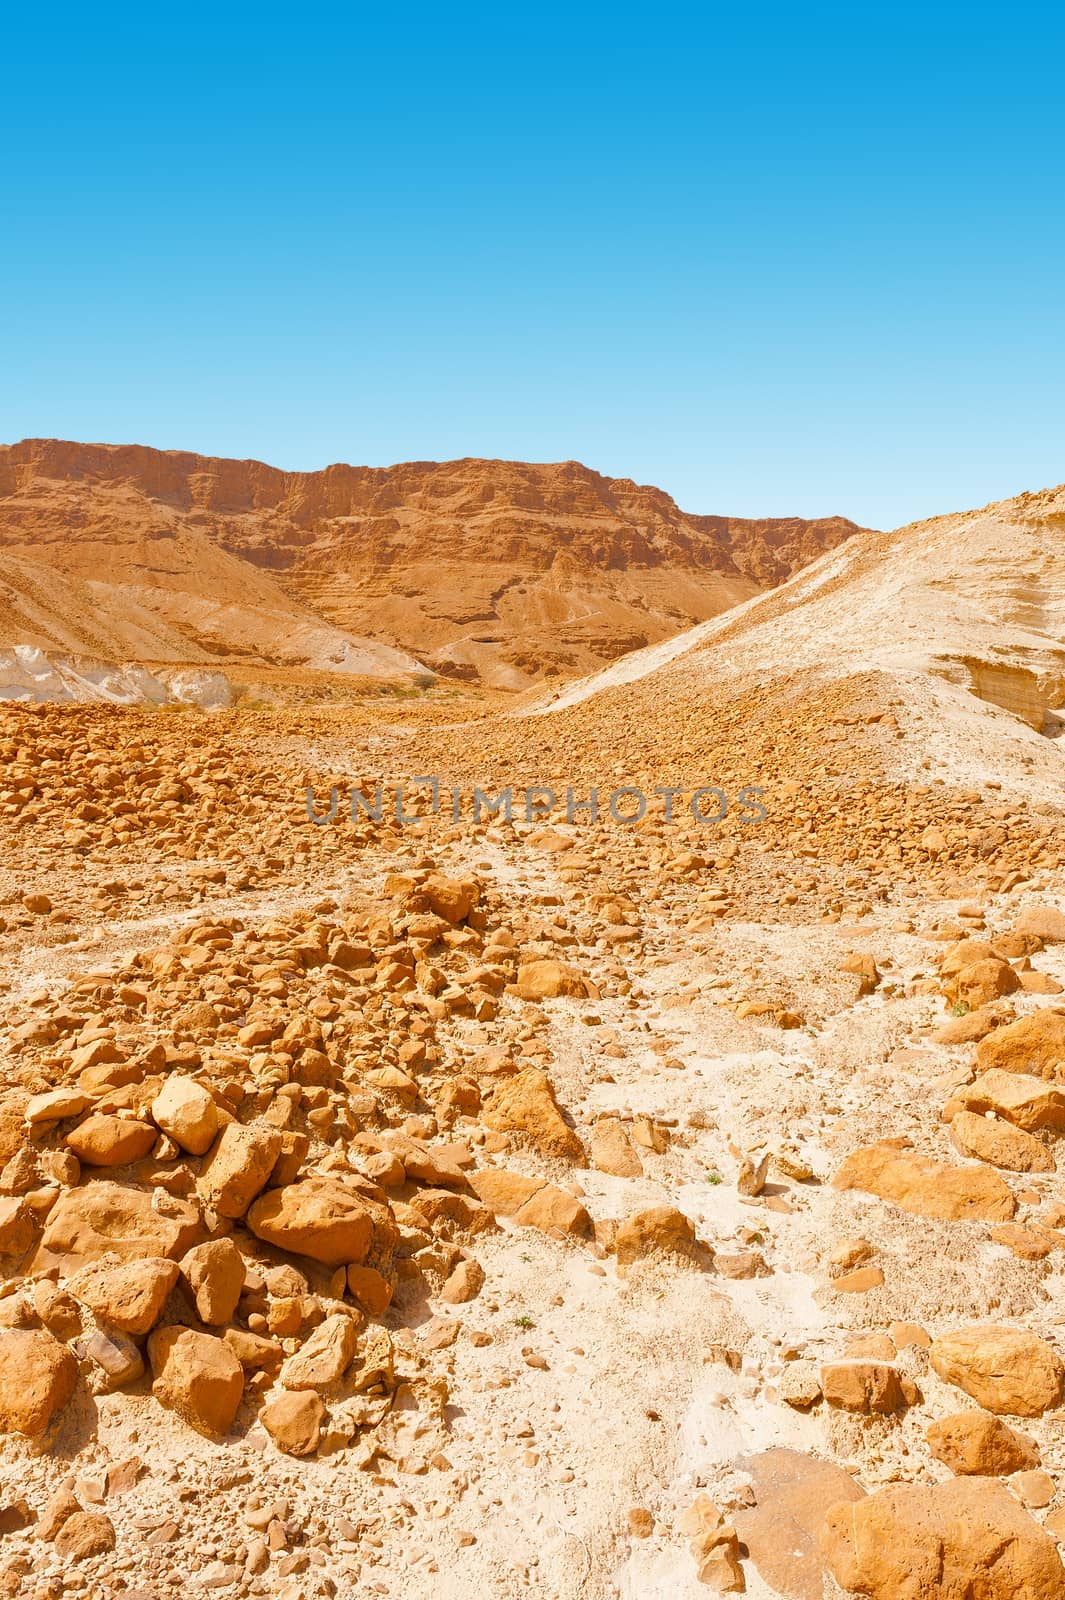 Stone Desert on the West Bank of the Jordan River